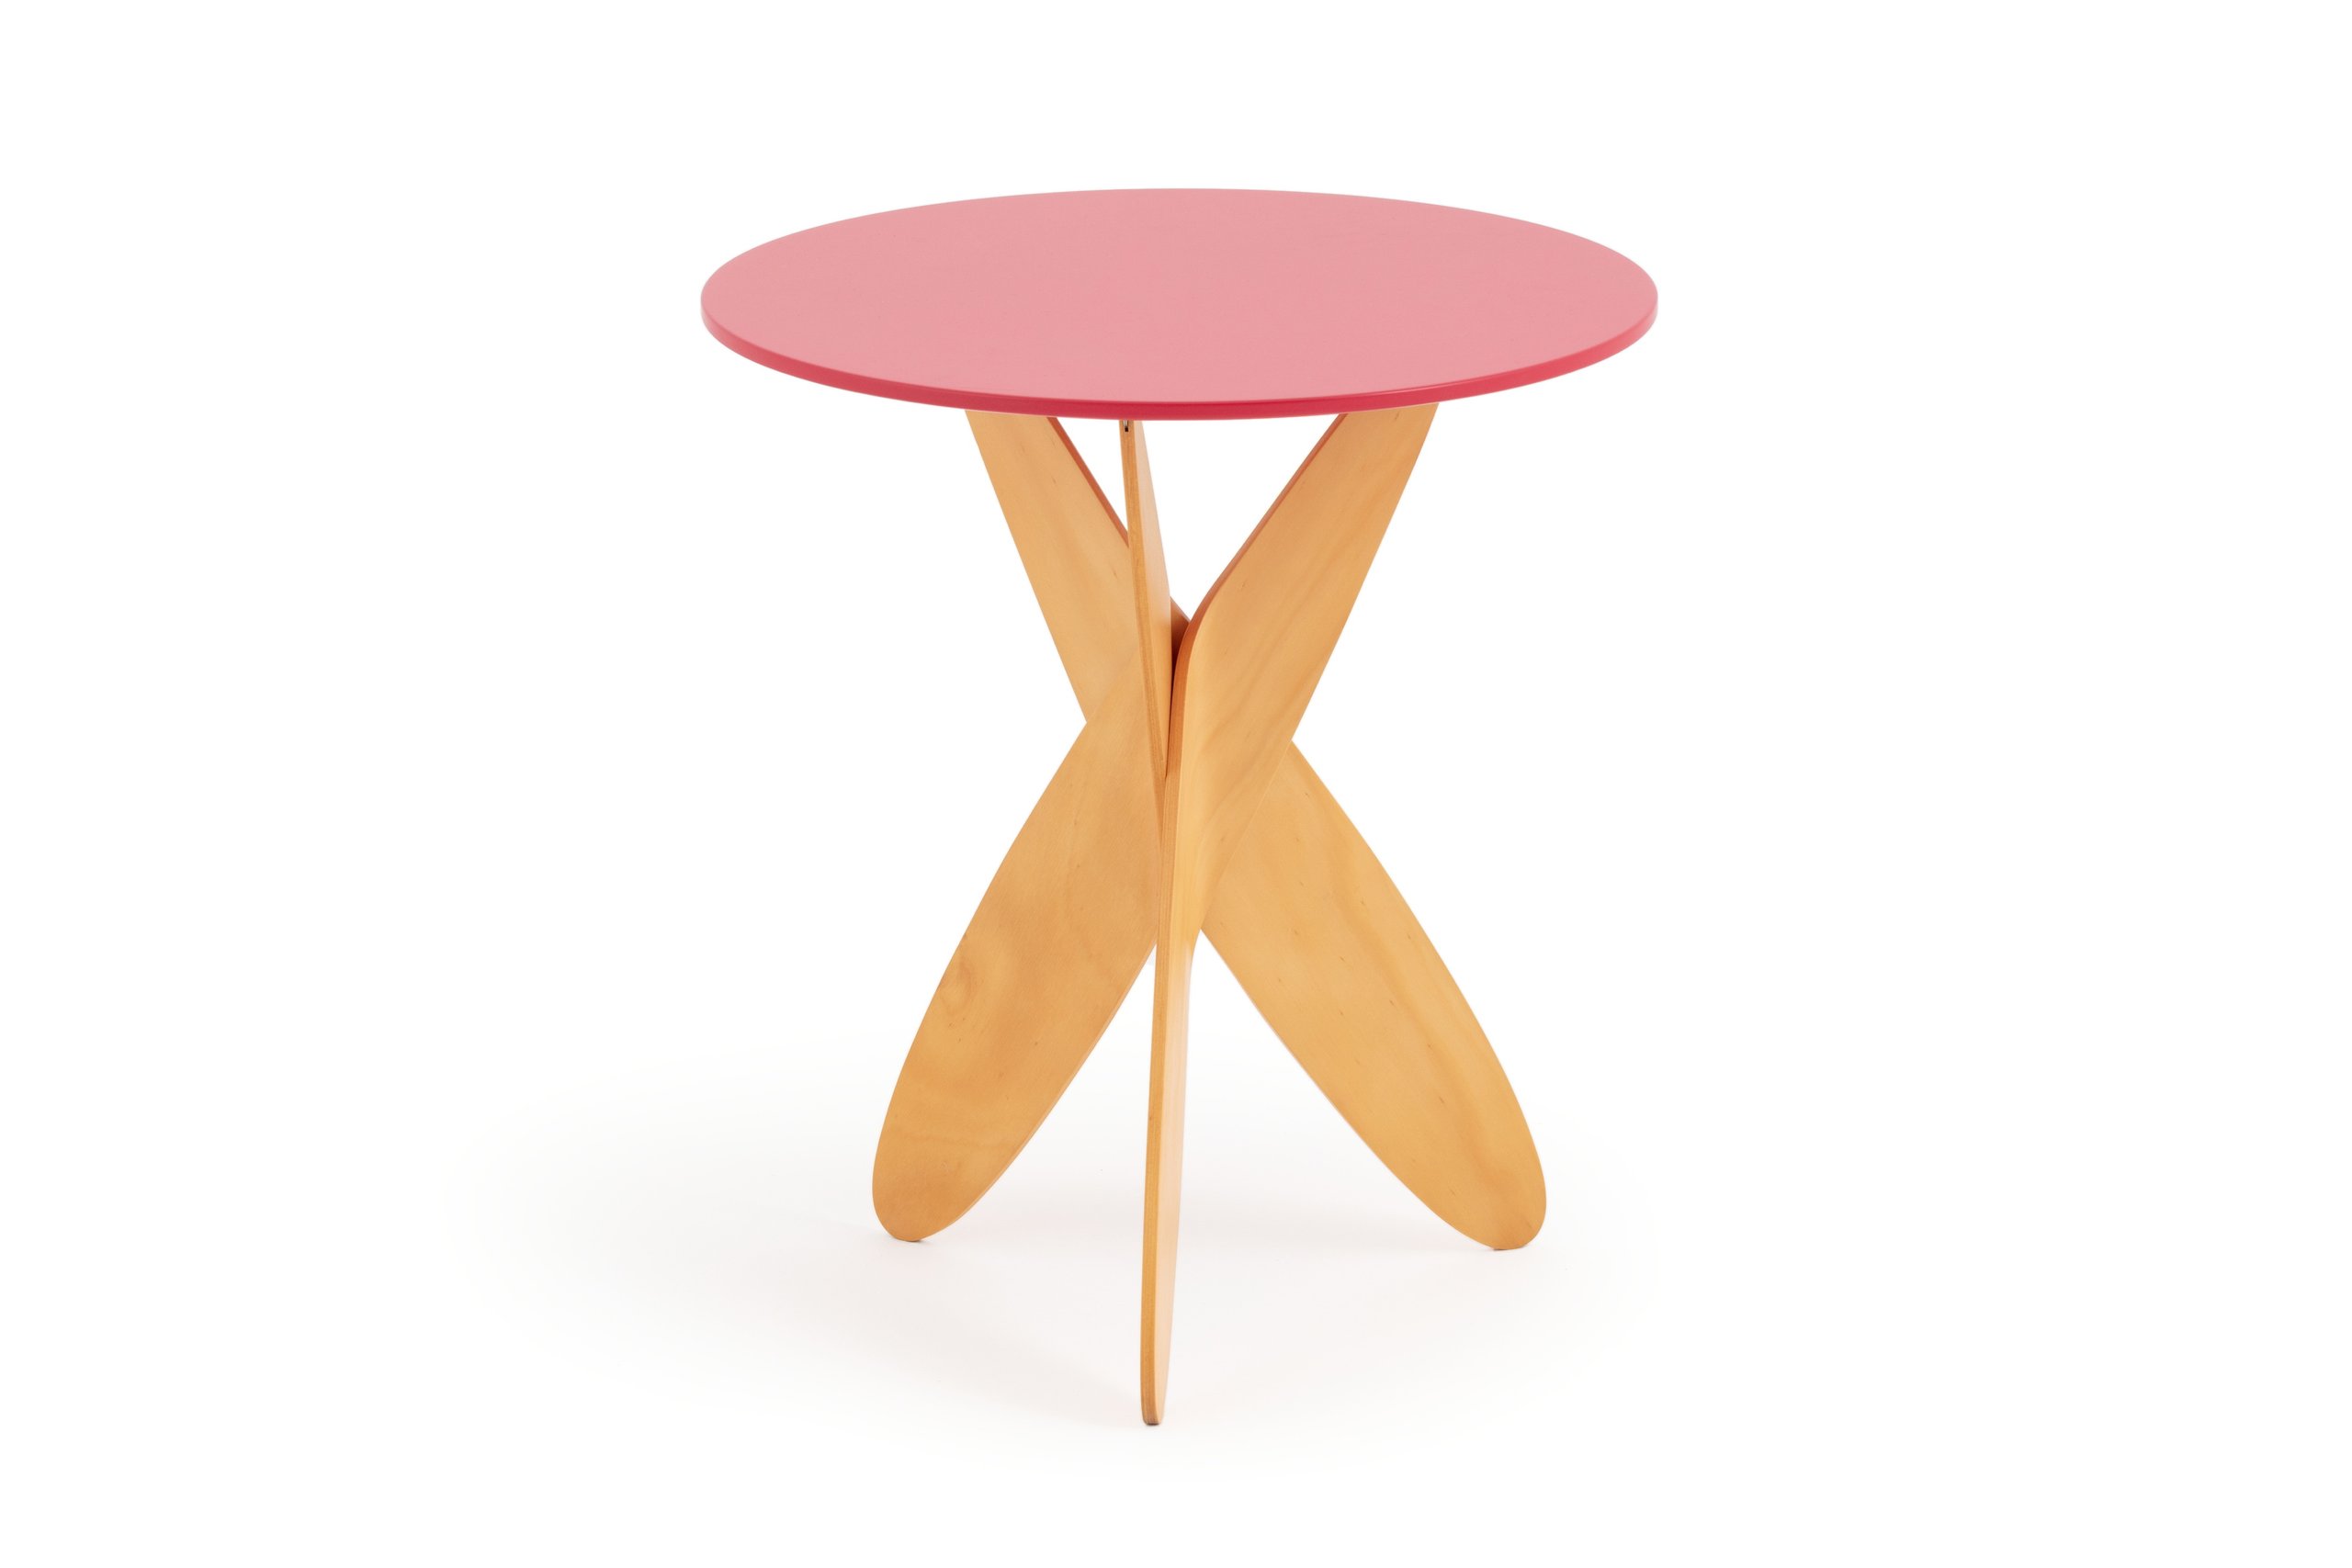 'Tina' table designed by Caroline Casey